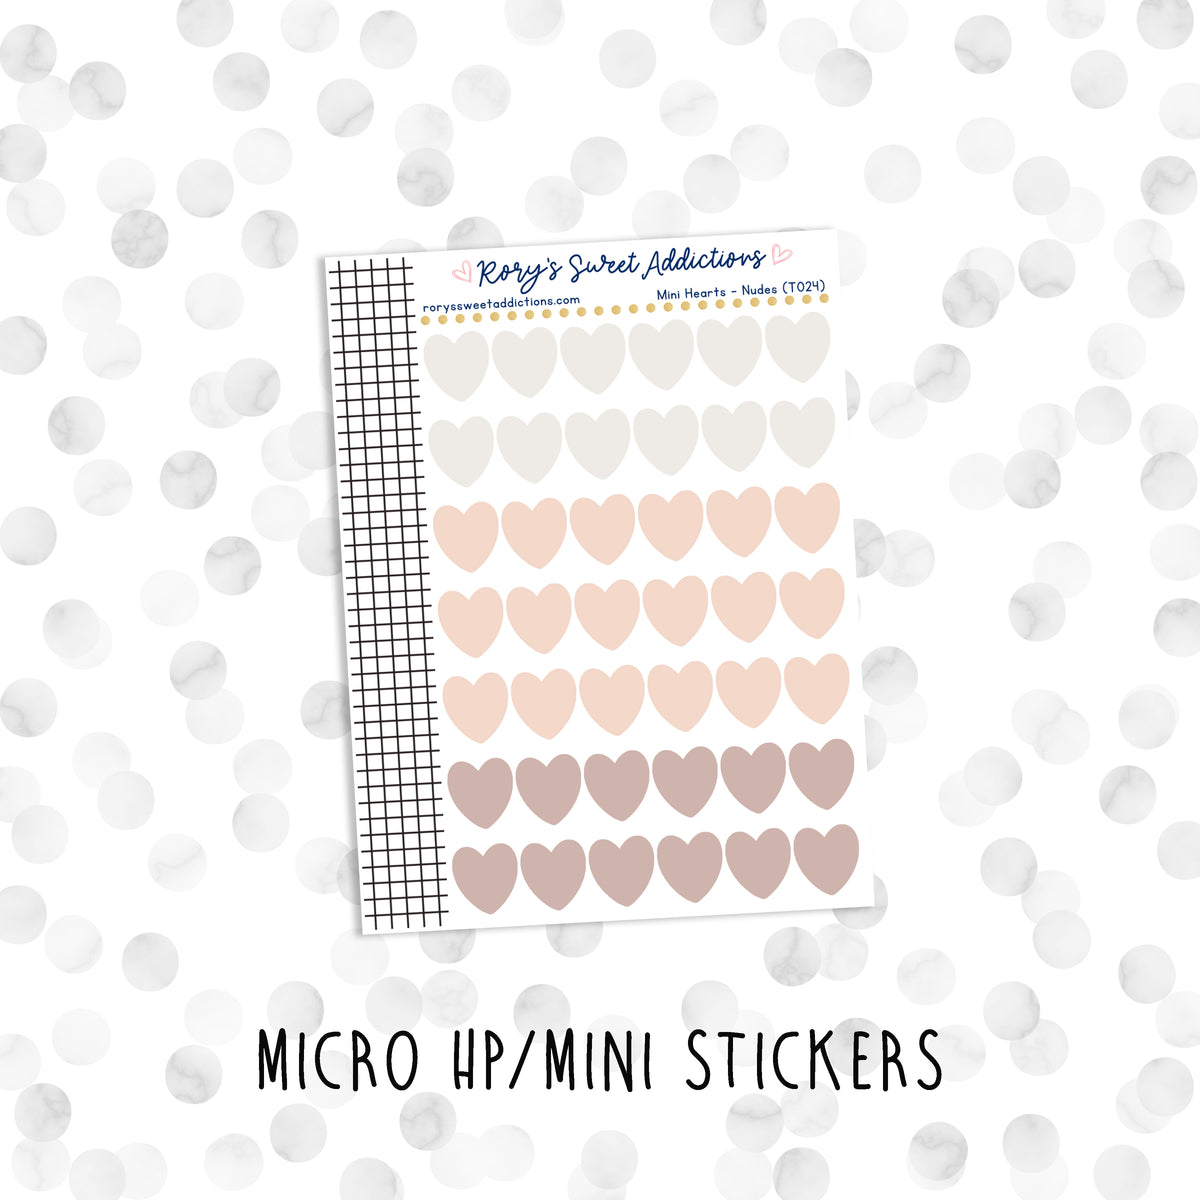 Mini Hearts - Nudes // Micro HP - Mini Stickers – Rory's Sweet Addictions